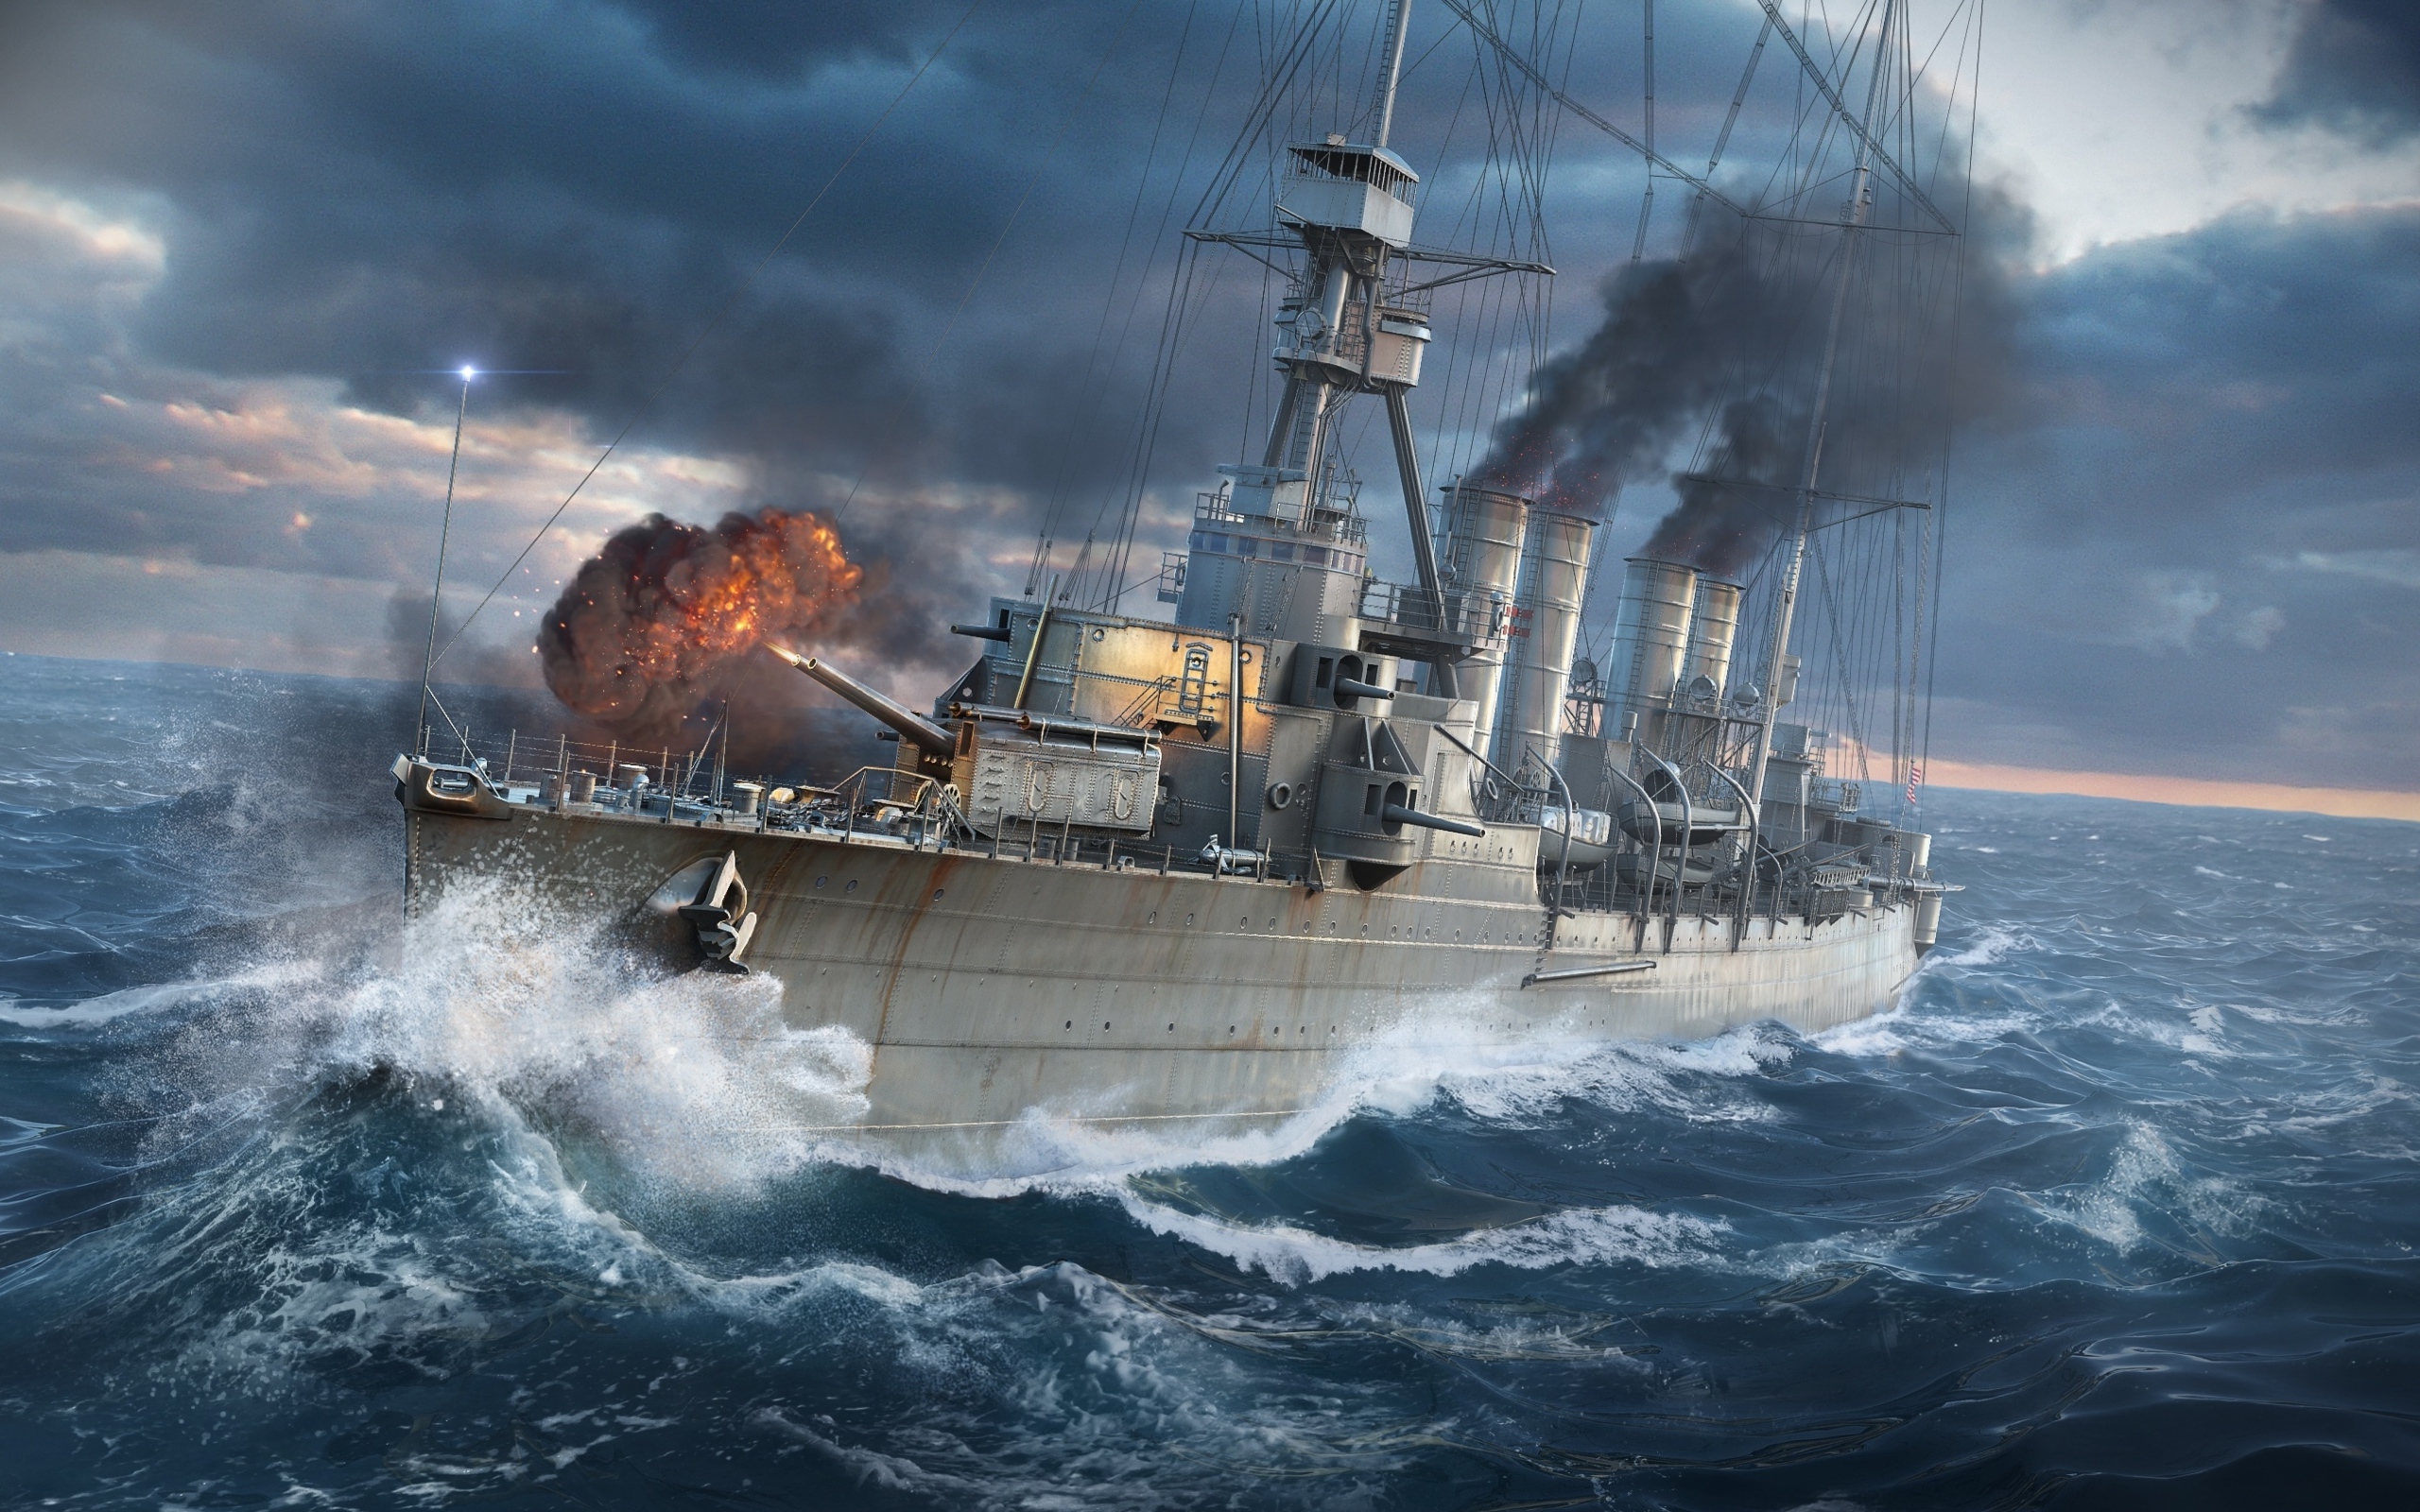 Military battleship at sea during a storm